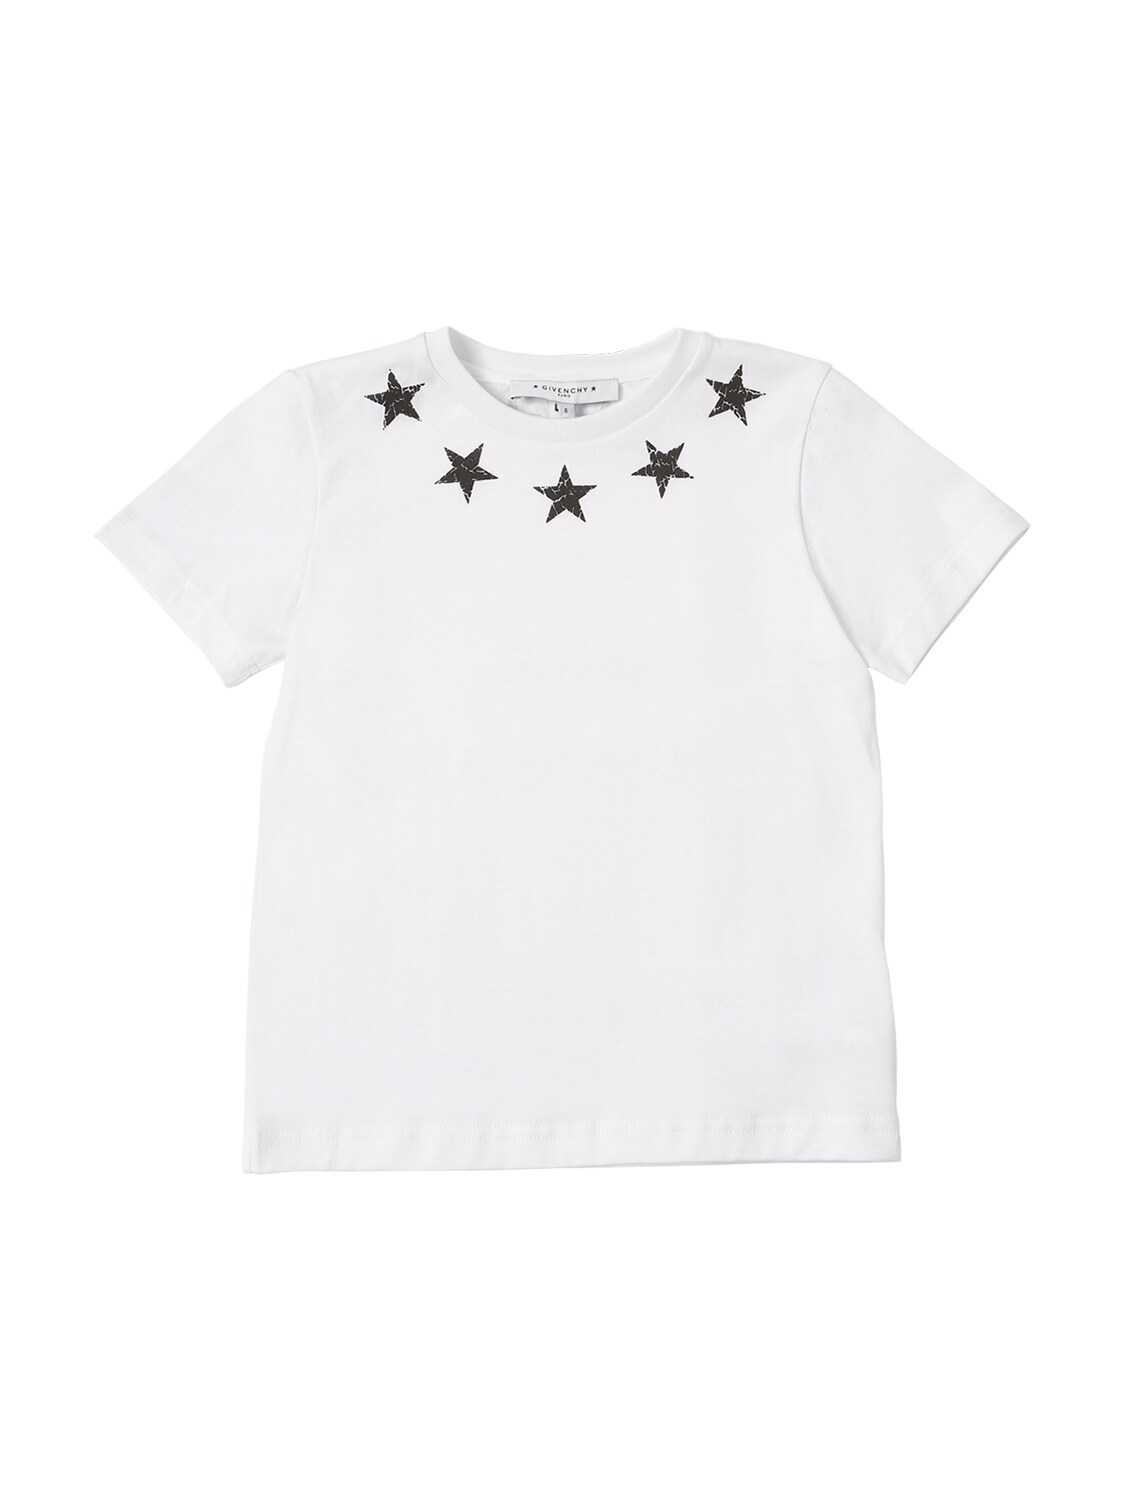 givenchy white t shirt stars